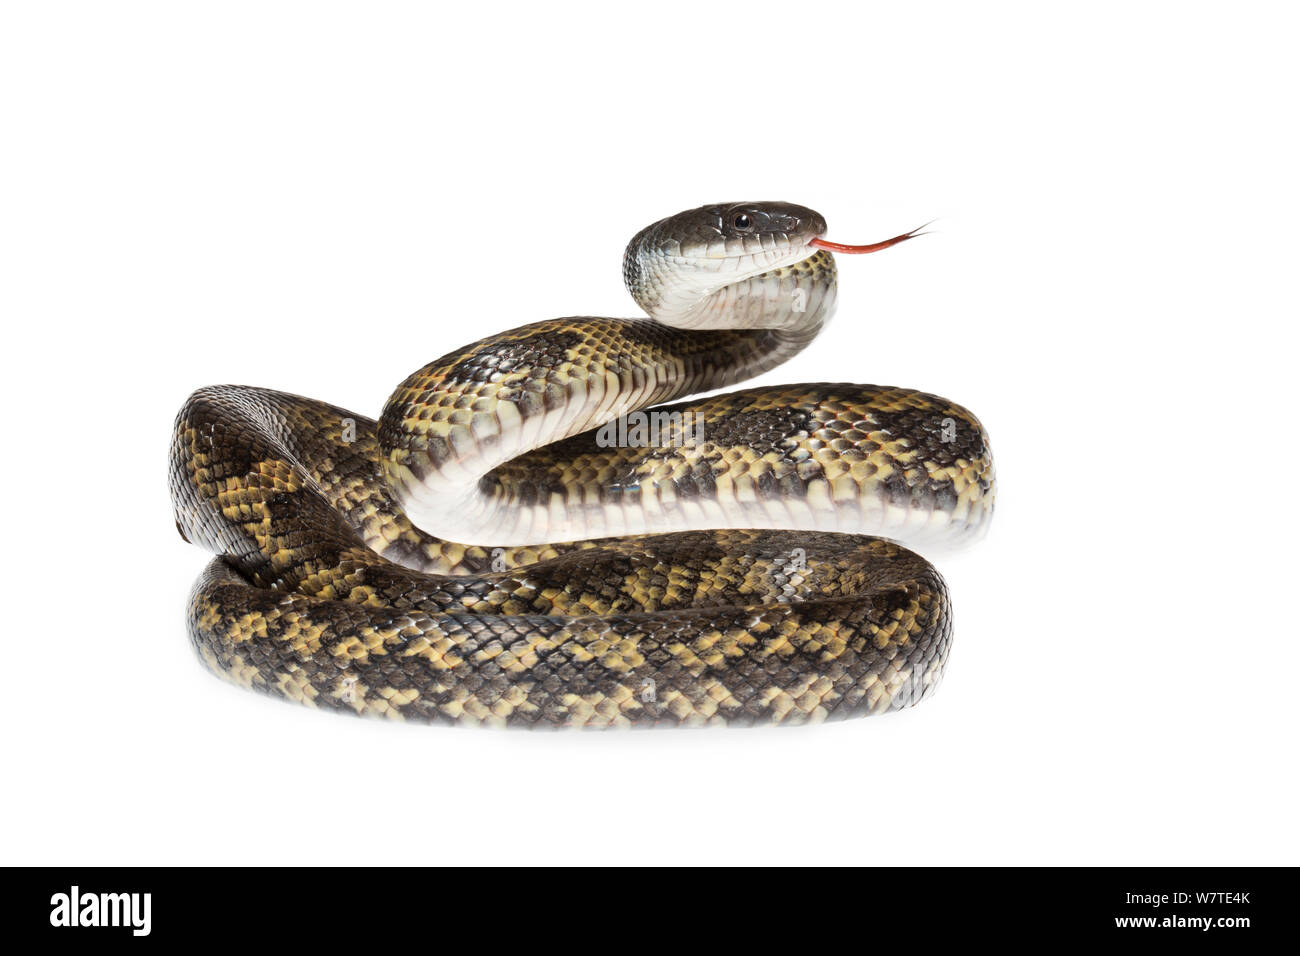 Texas Rat Snake (Elaphe obsolete lindheimeri) Texas, USA. Meetyourneighbours.net project. Stock Photo